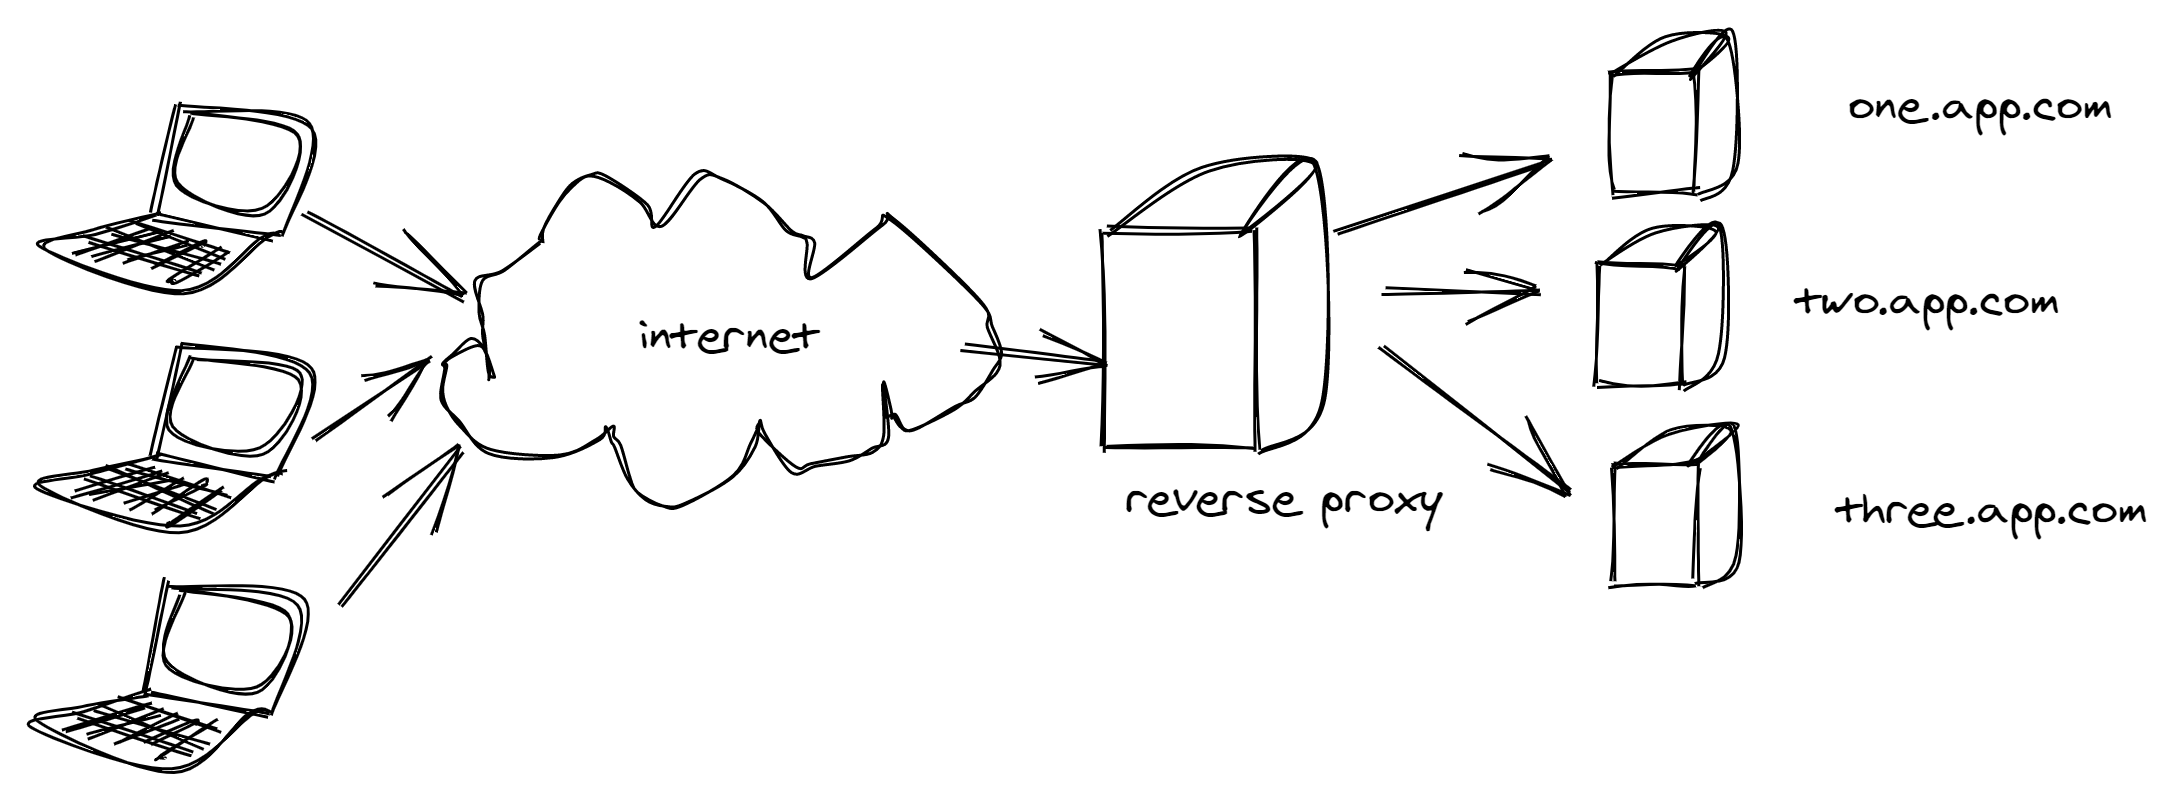 reverse proxies